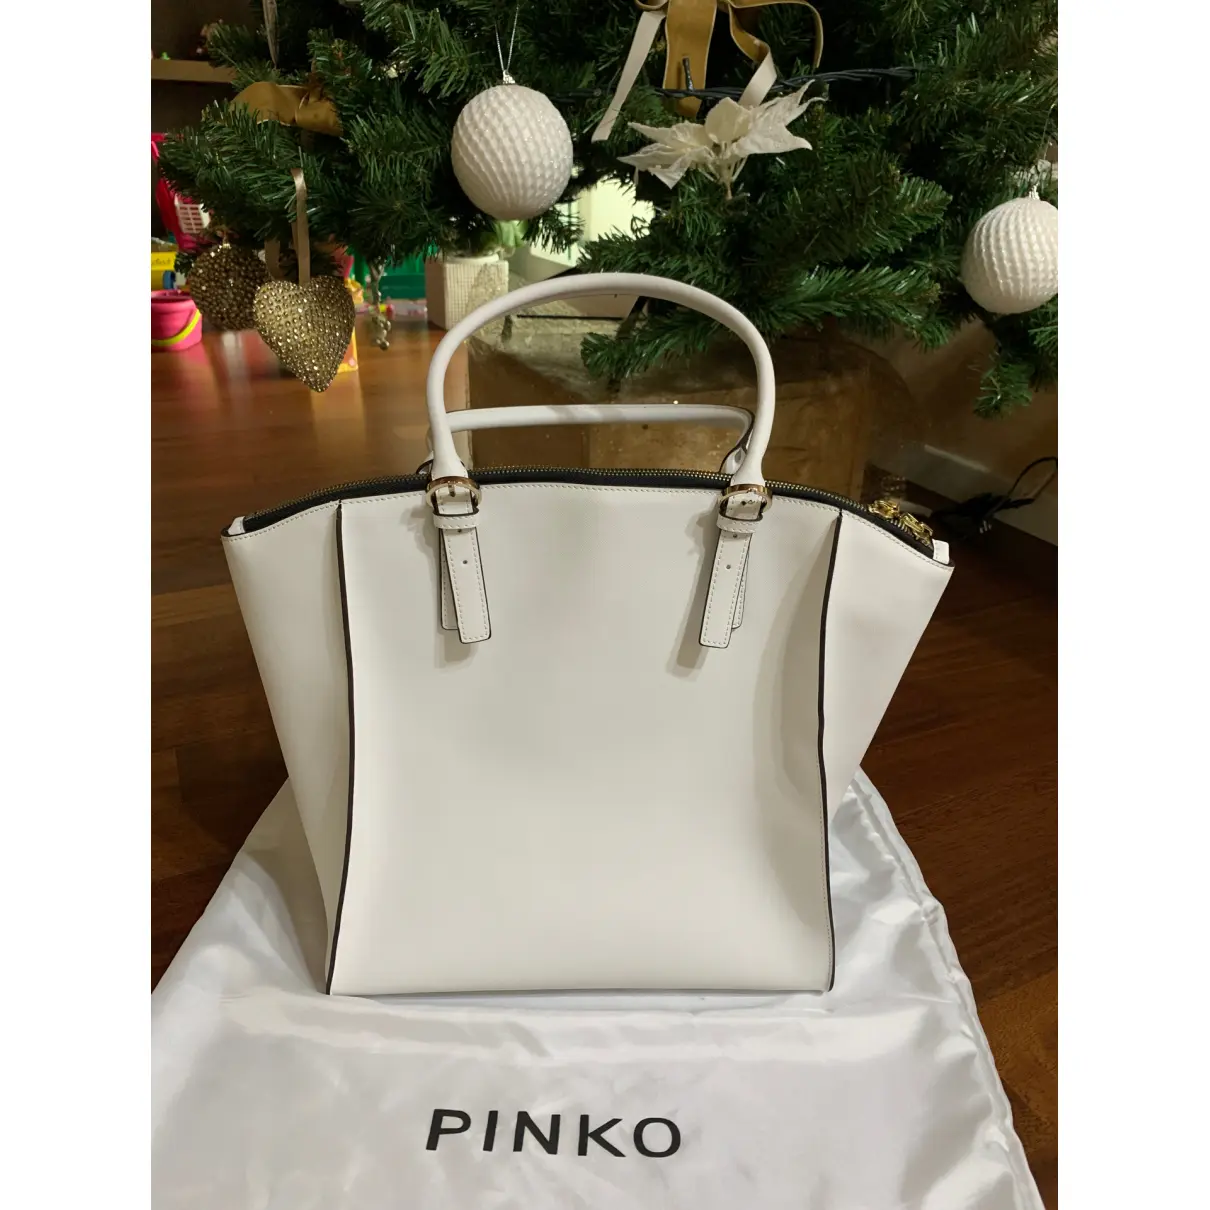 Buy Pinko Leather travel bag online